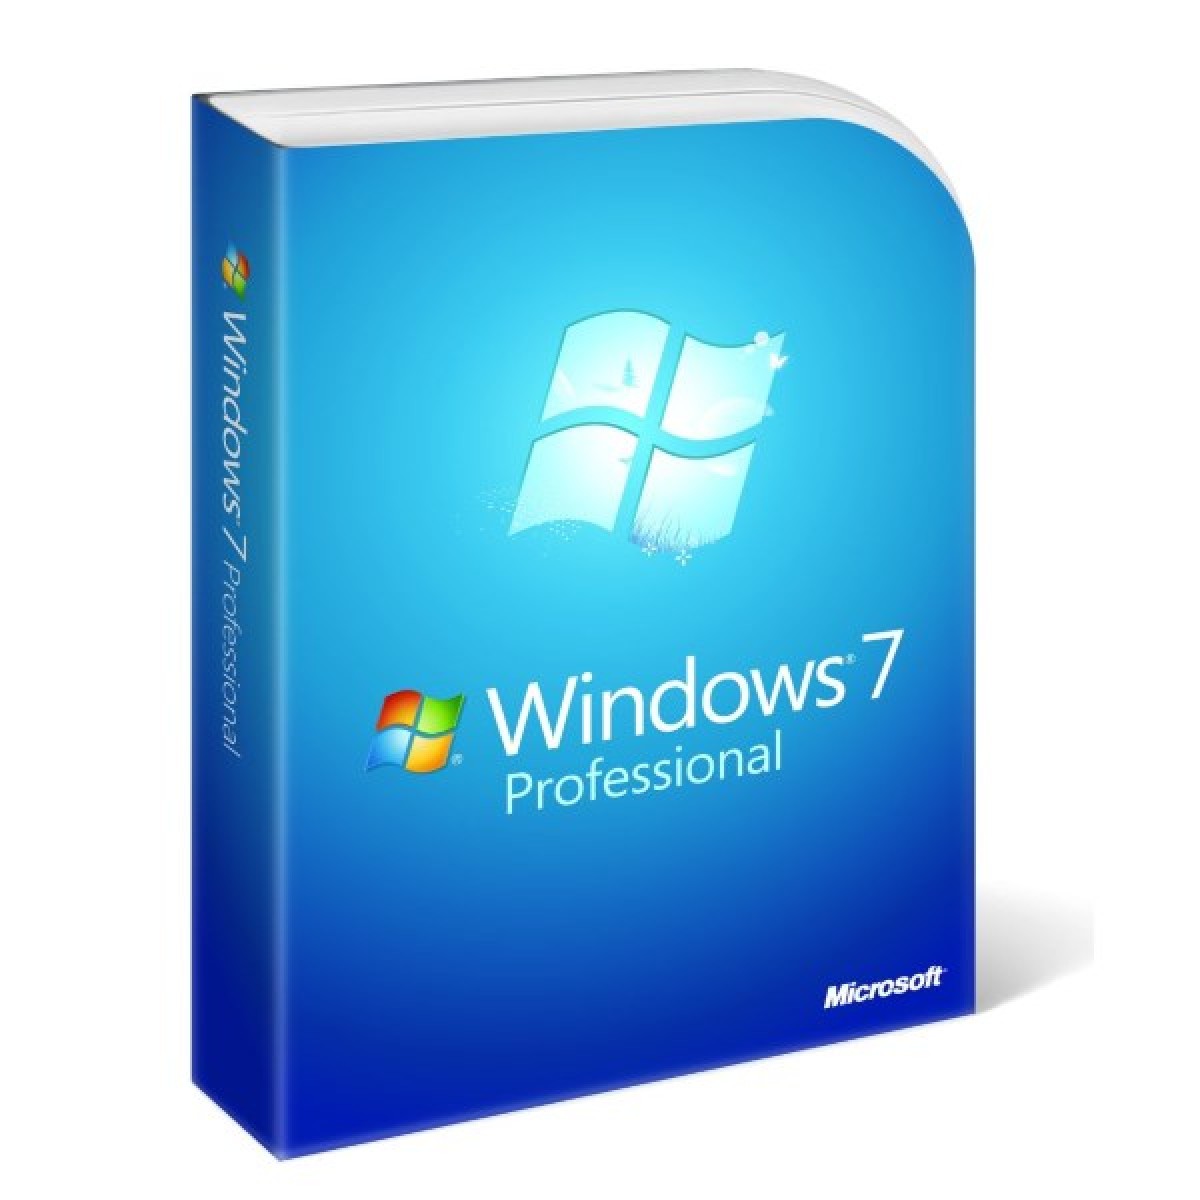 modscan software for windows 7